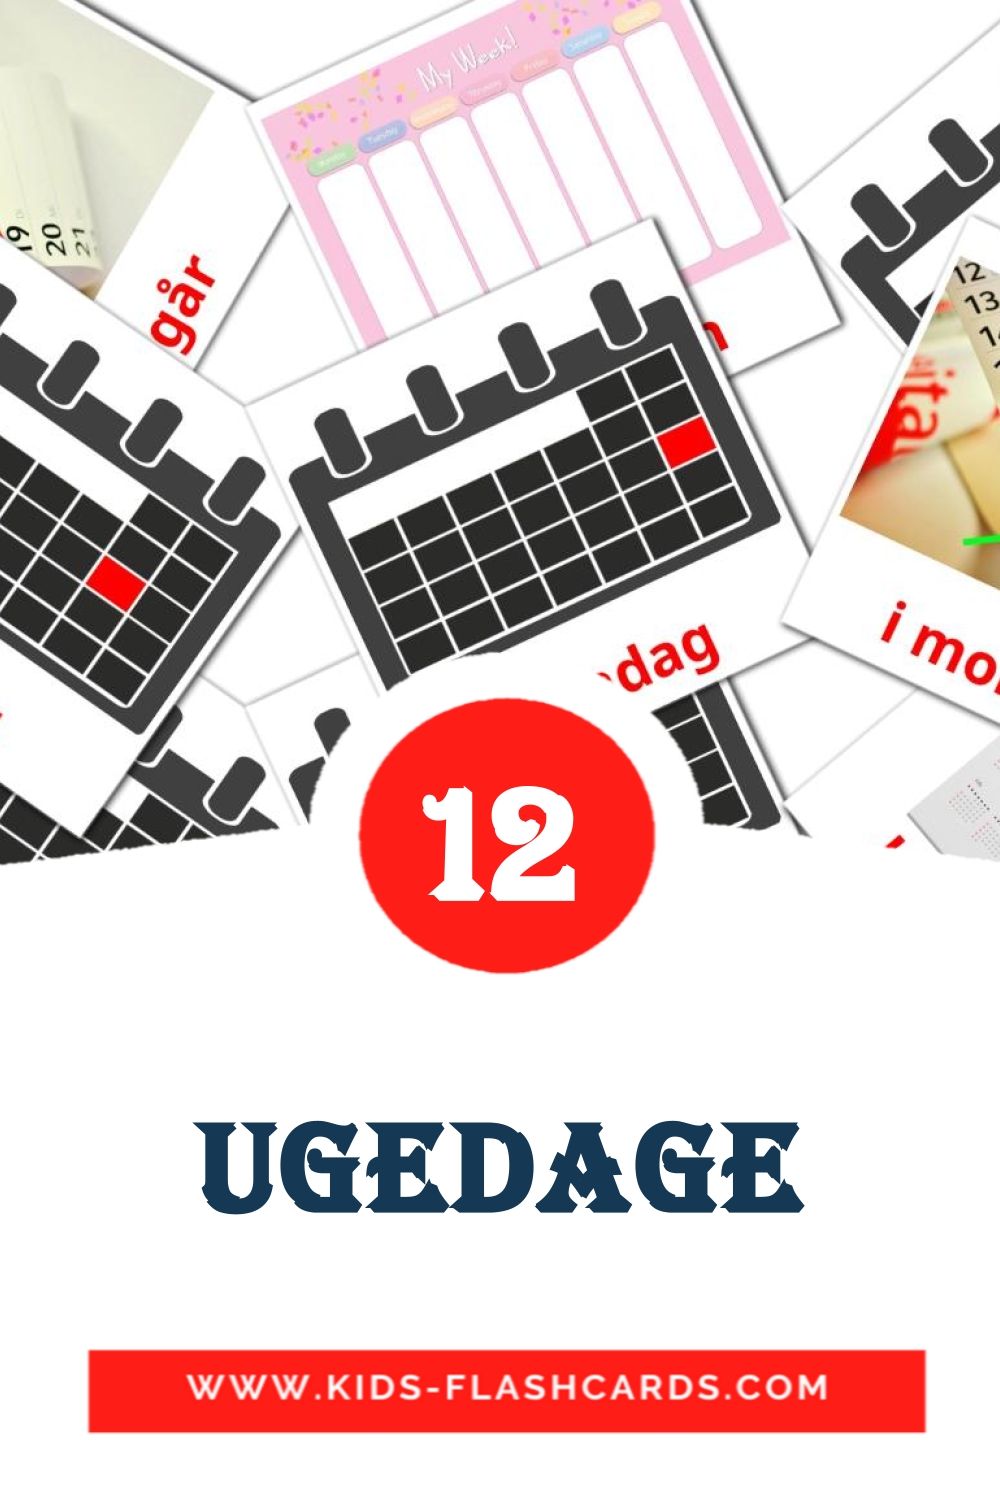 12 carte illustrate di Ugedage per la scuola materna in dansk